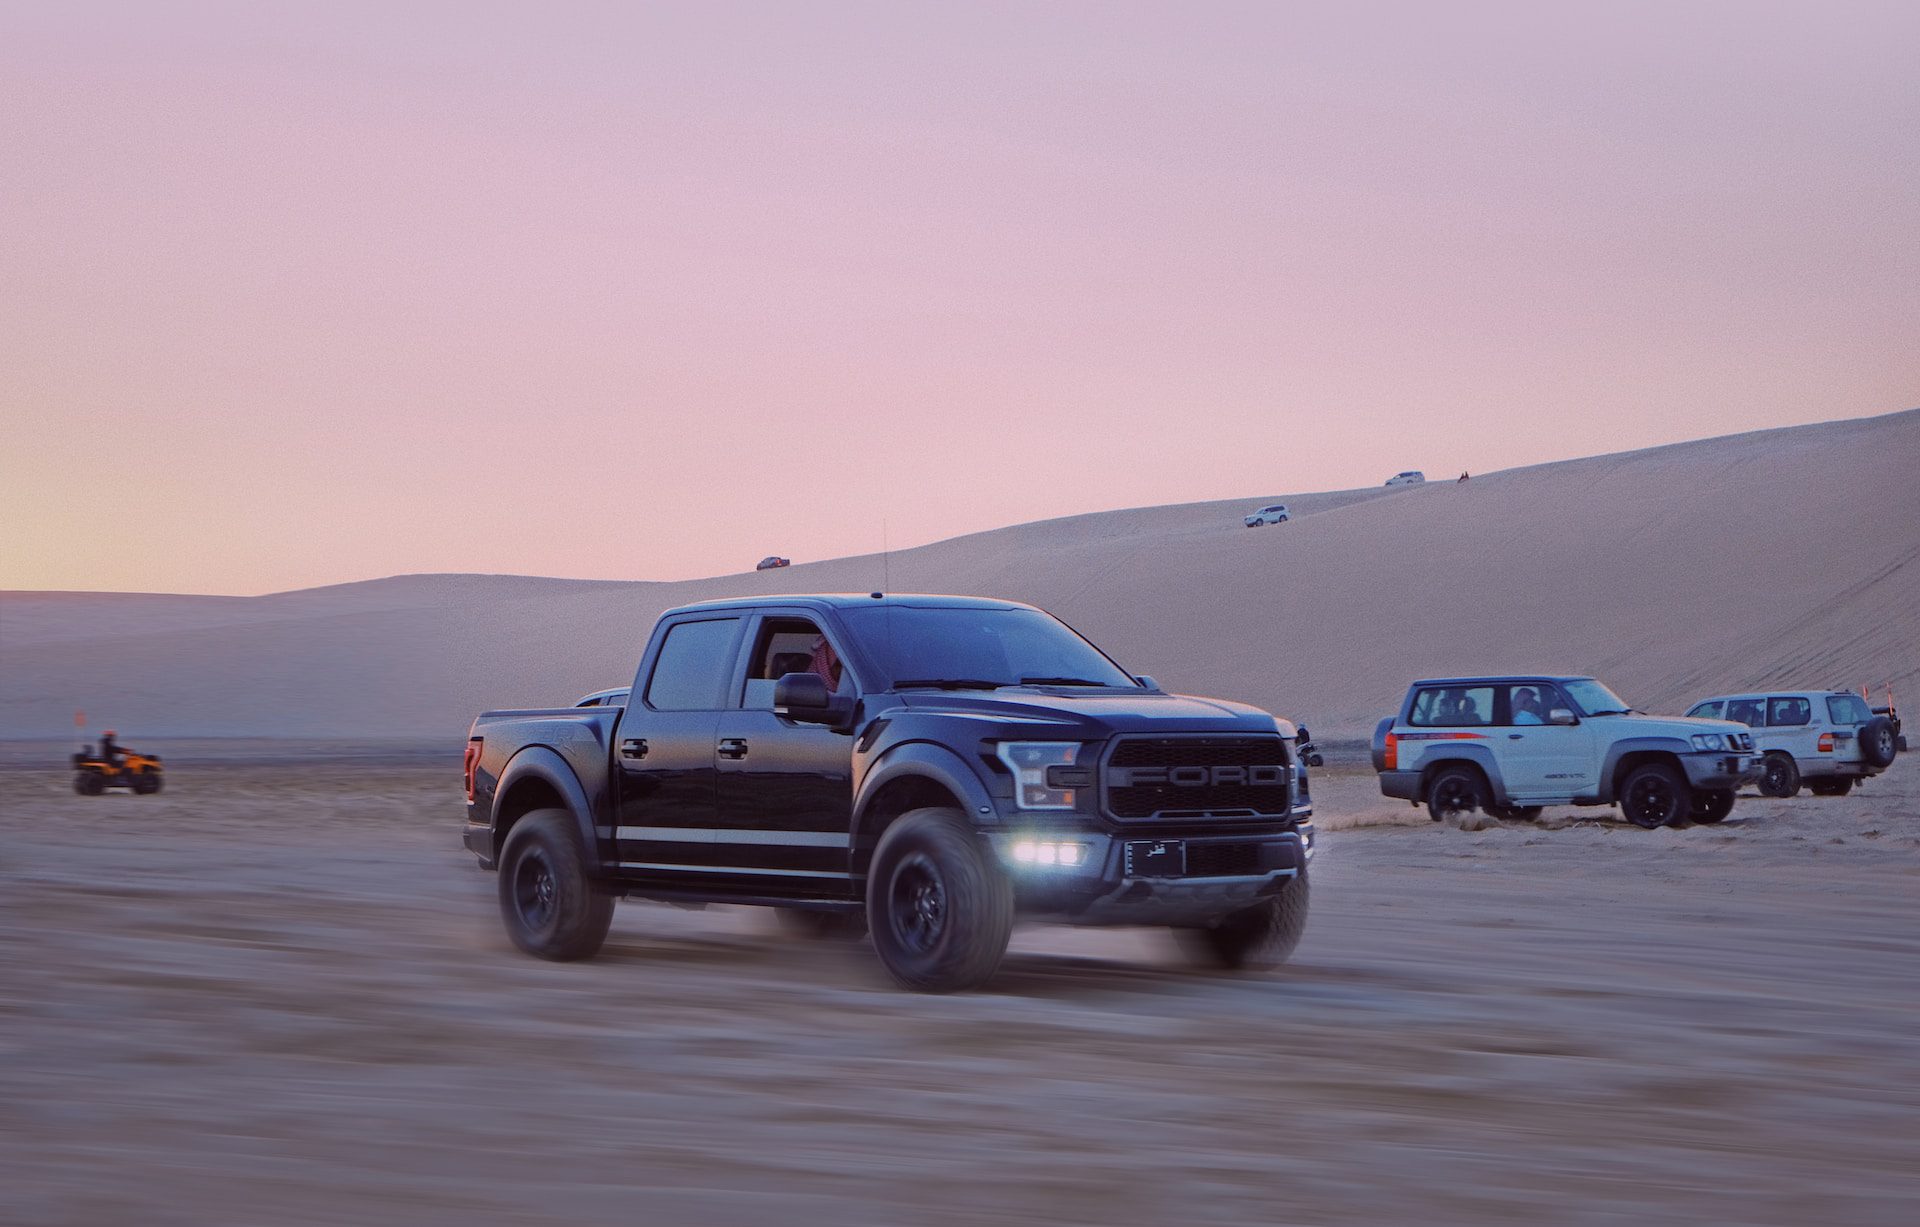 4x4s driving fast across the desert at sunset.